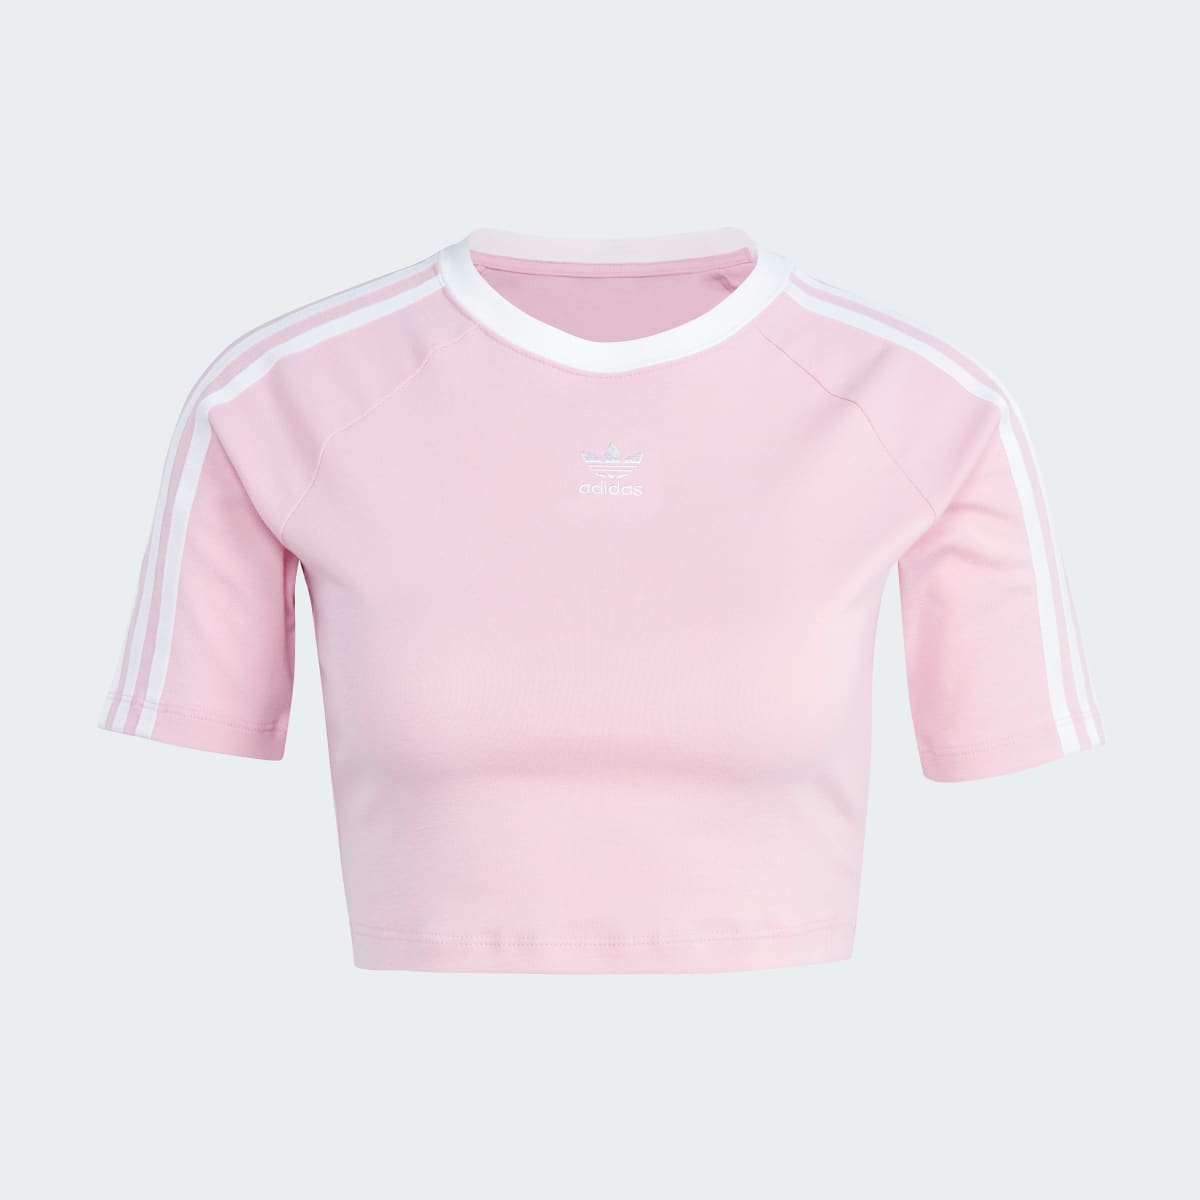 Adidas 3-Stripes Baby T-Shirt. 5